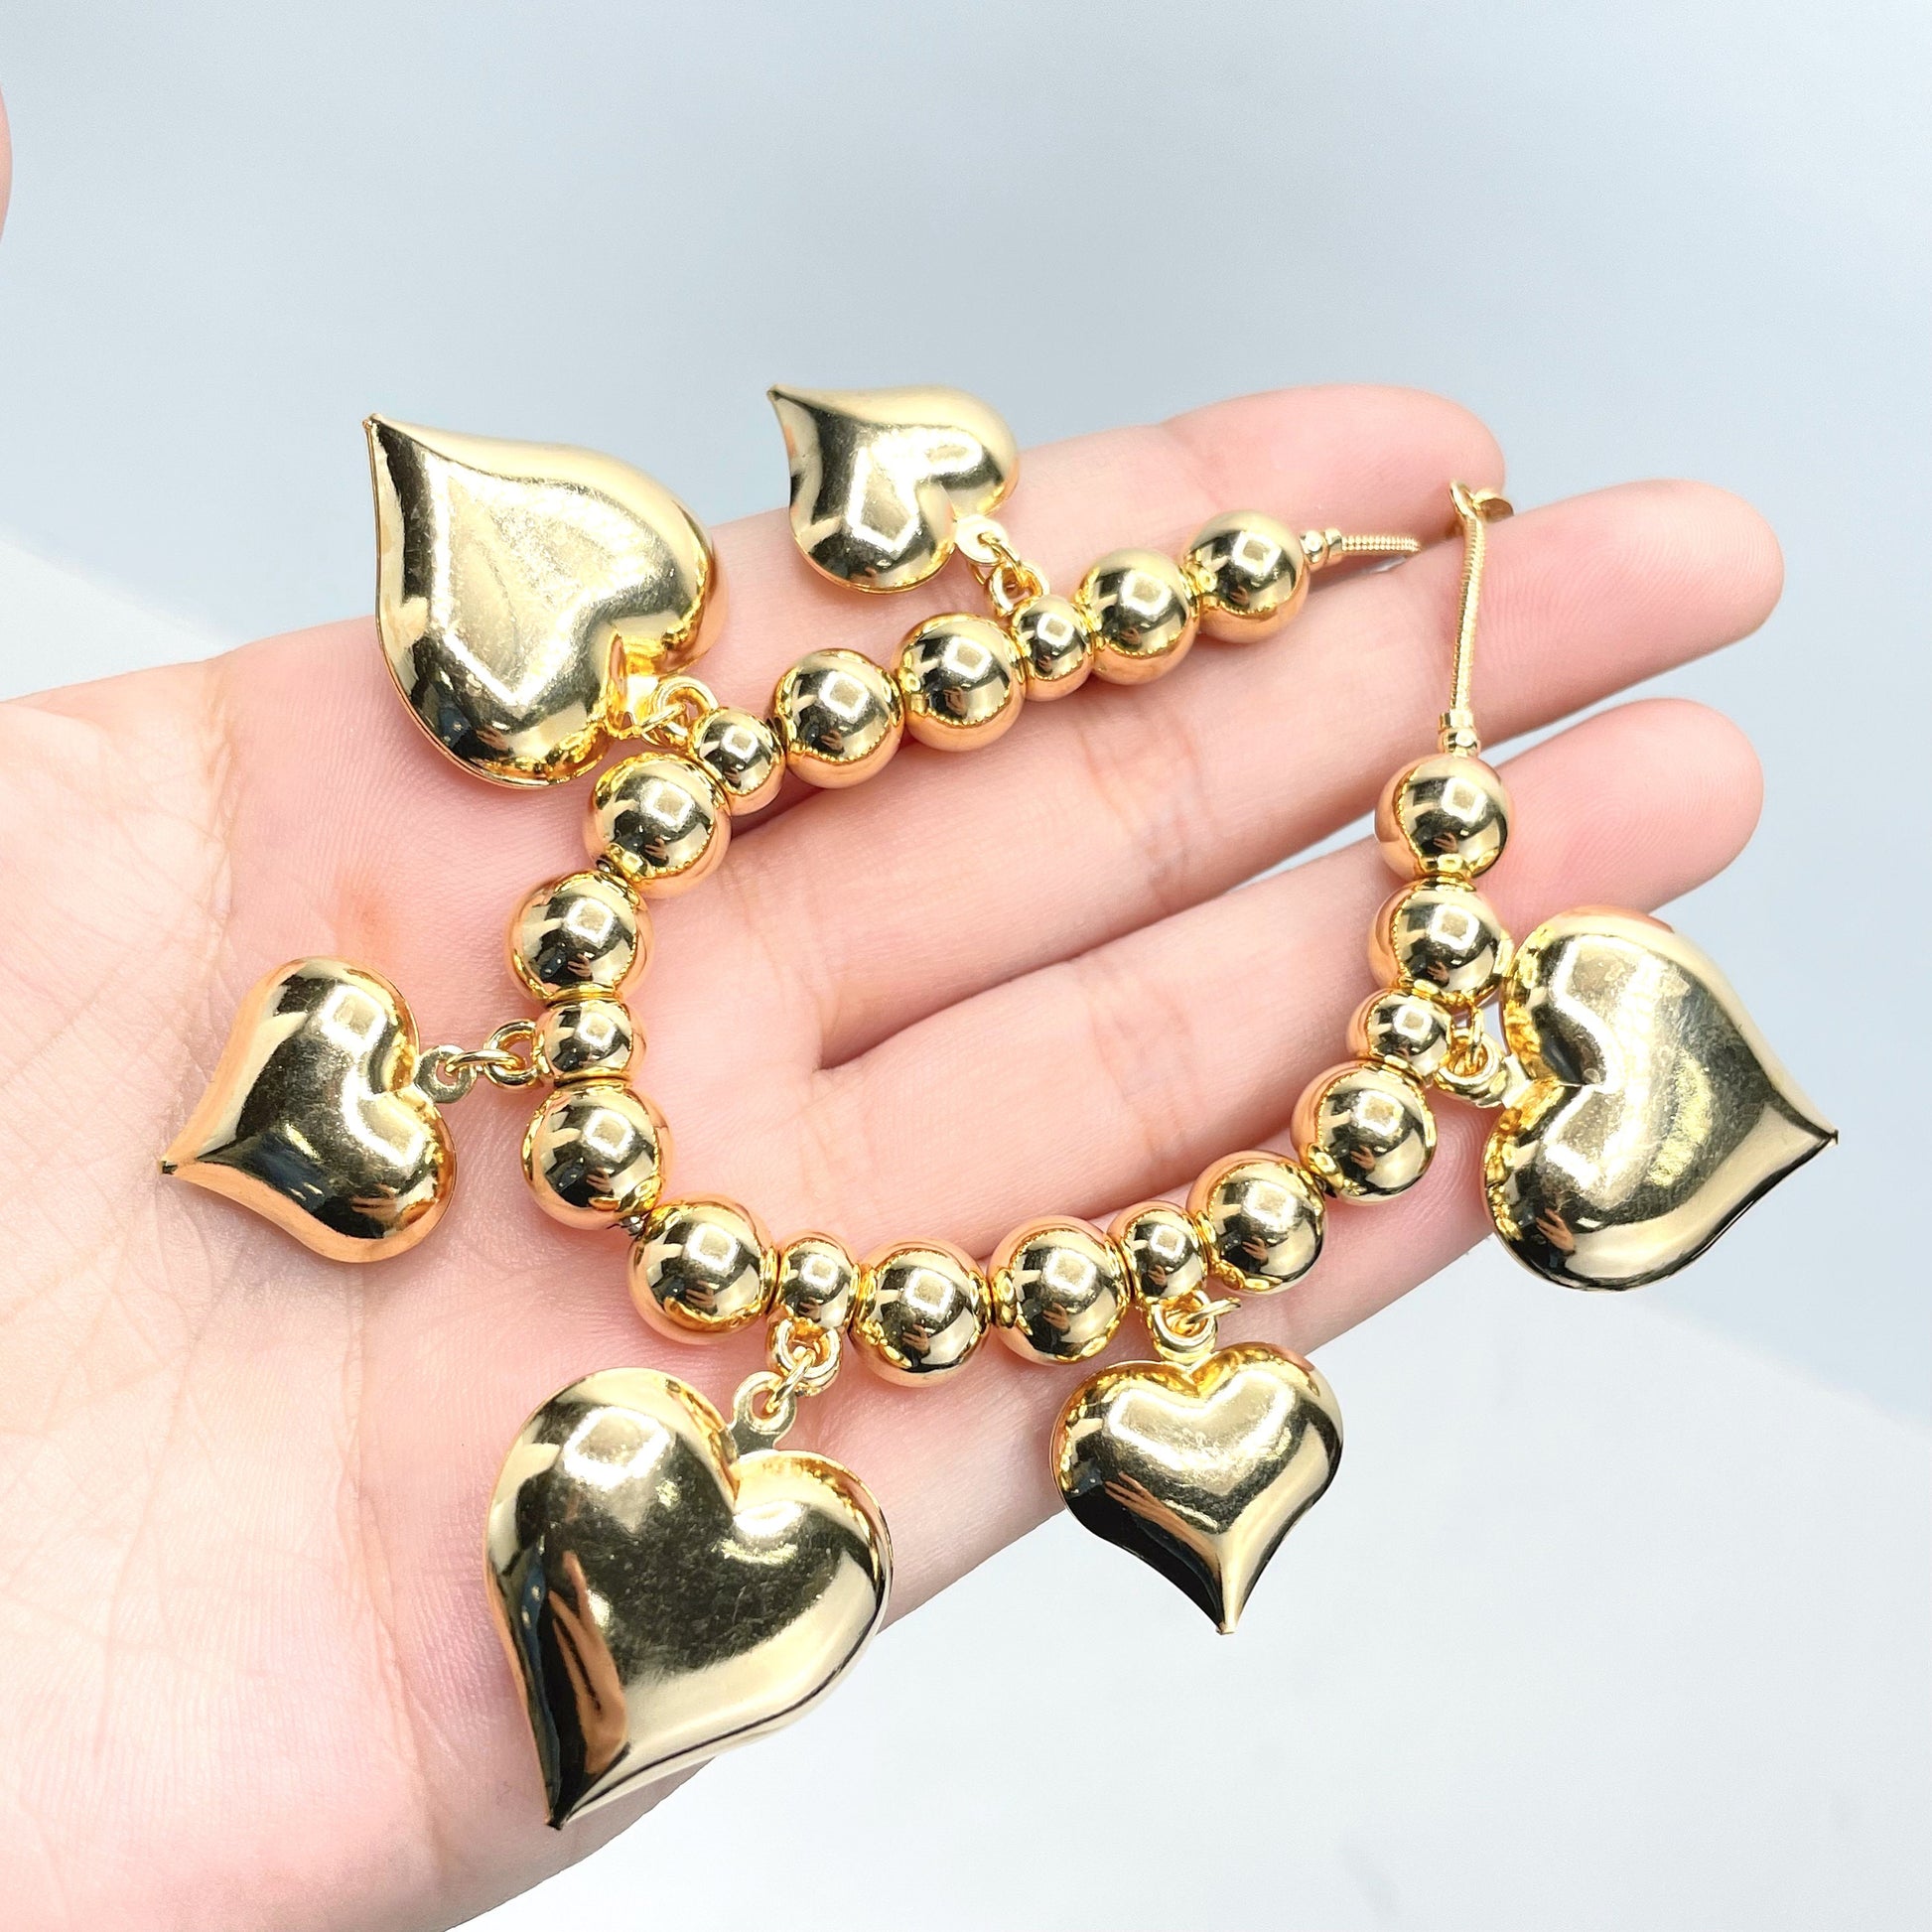 Buy Heart Charms for Bracelets & Pendants